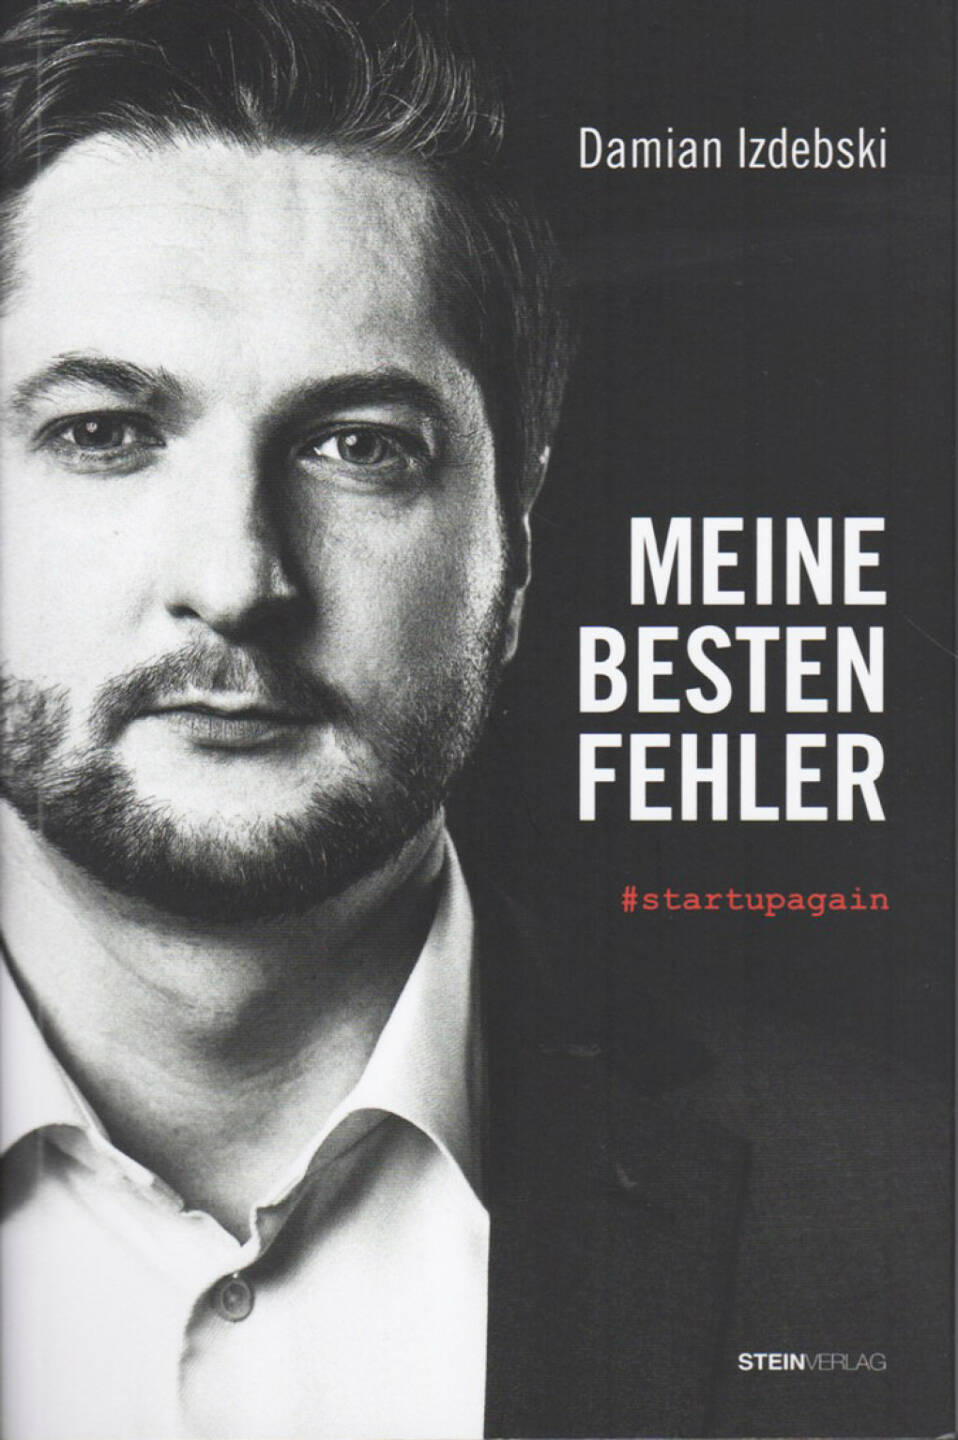 Damian Izdebski - Meine besten Fehler: #startupagain - http://boerse-social.com/financebooks/show/damian_izdebski_-_meine_besten_fehler_startupagain